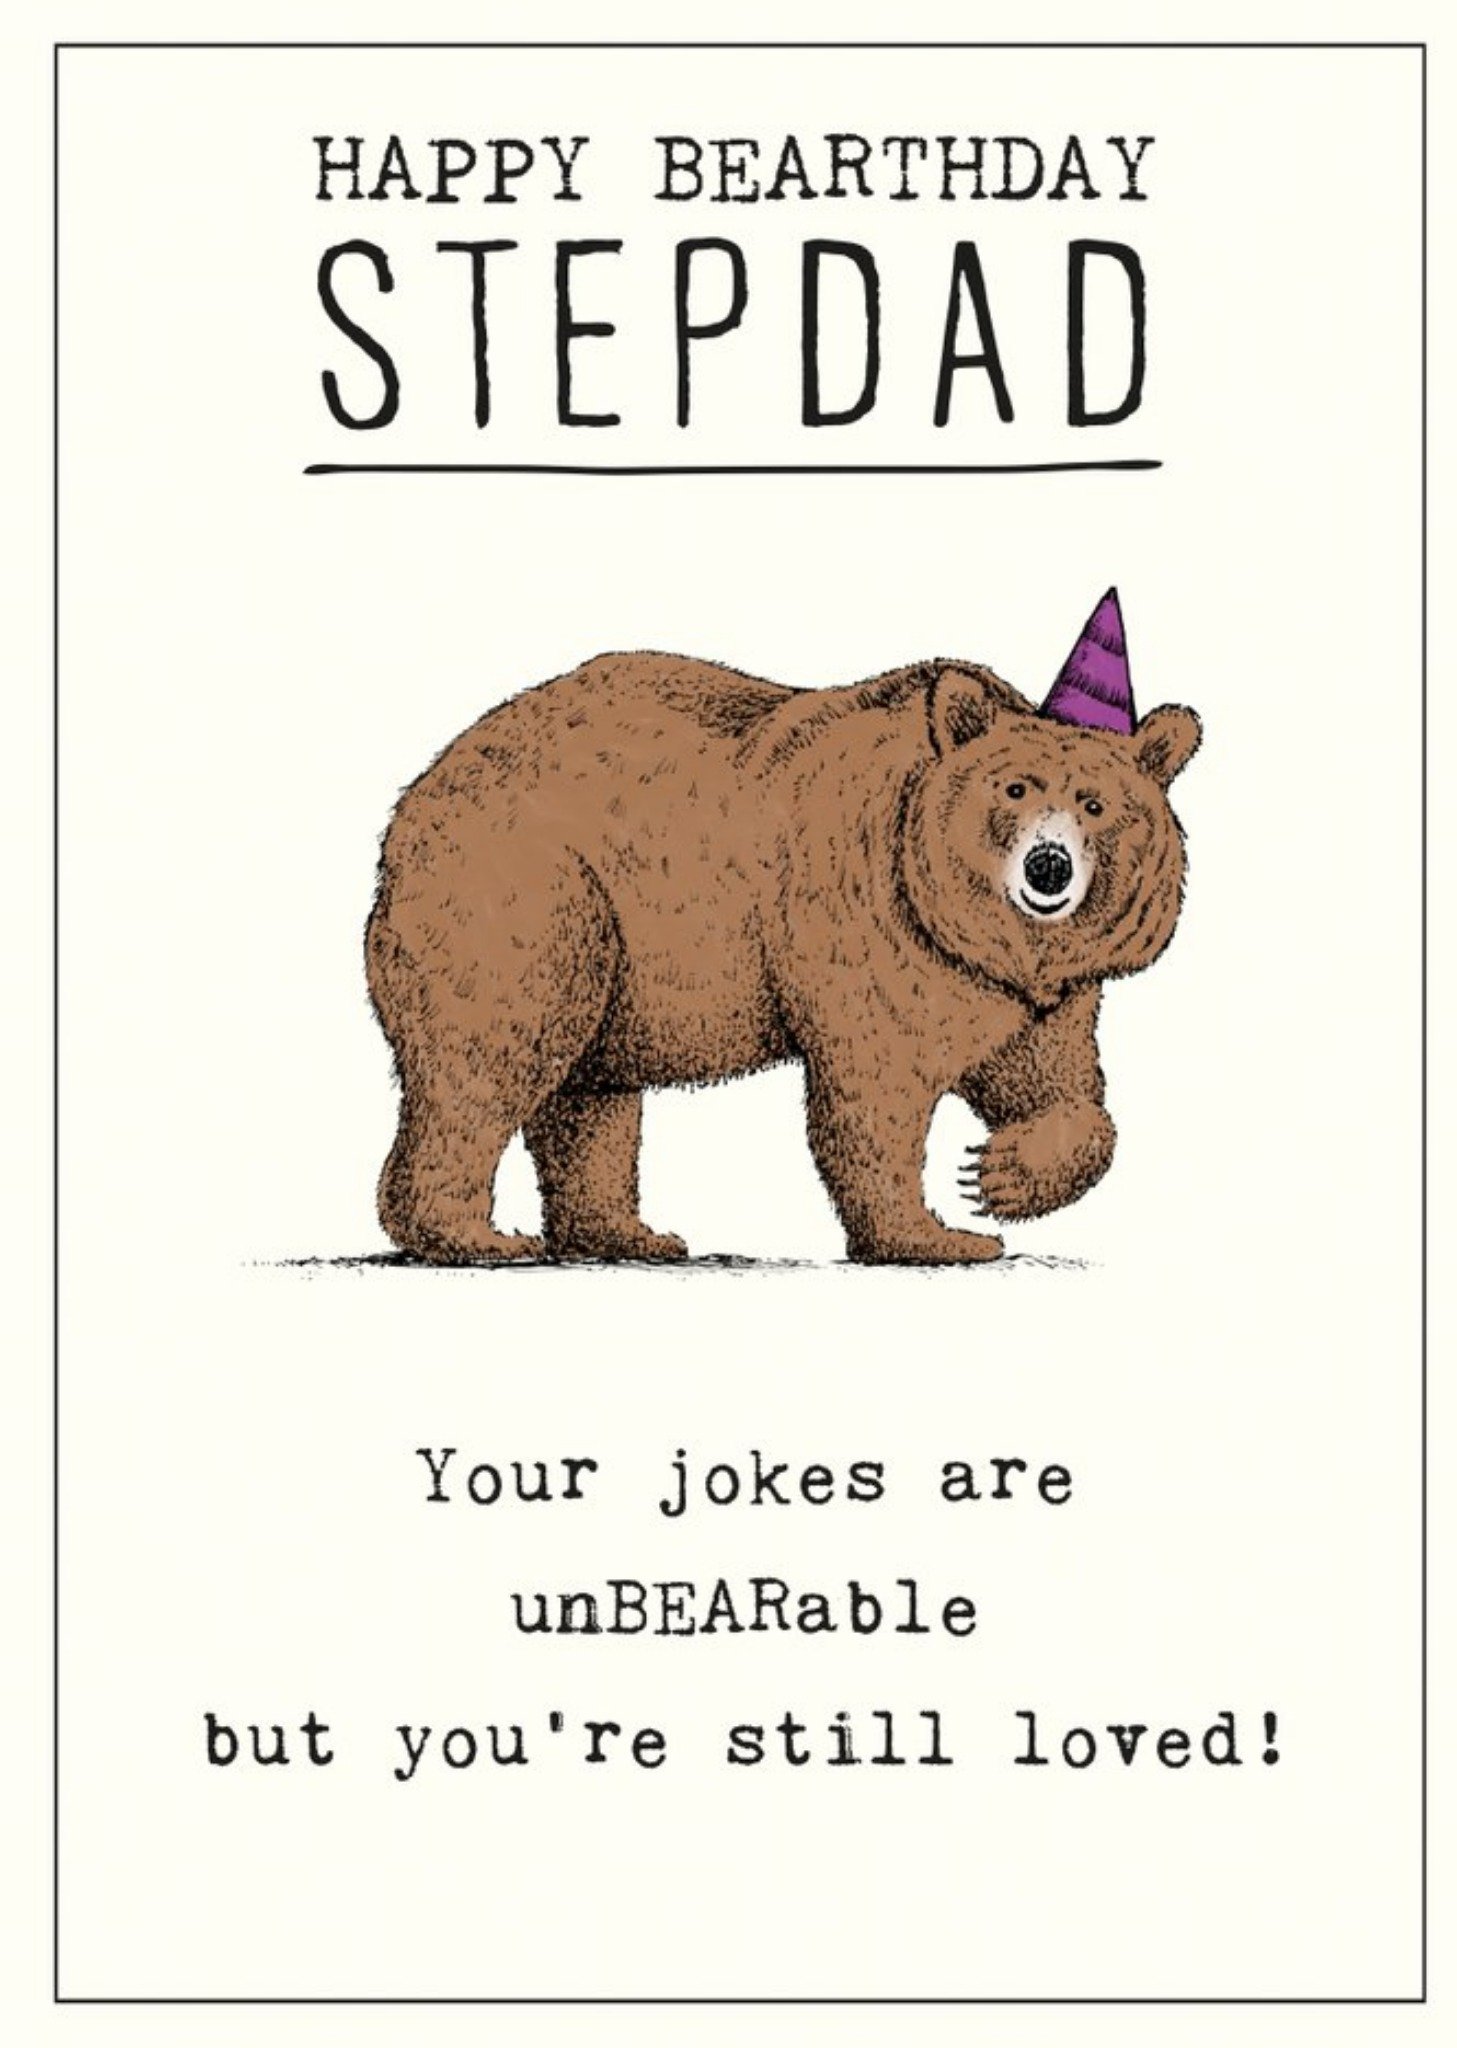 Moonpig Fun Illustration Of A Bear Happy Birthday Step Dad Unbearable Jokes Card Ecard